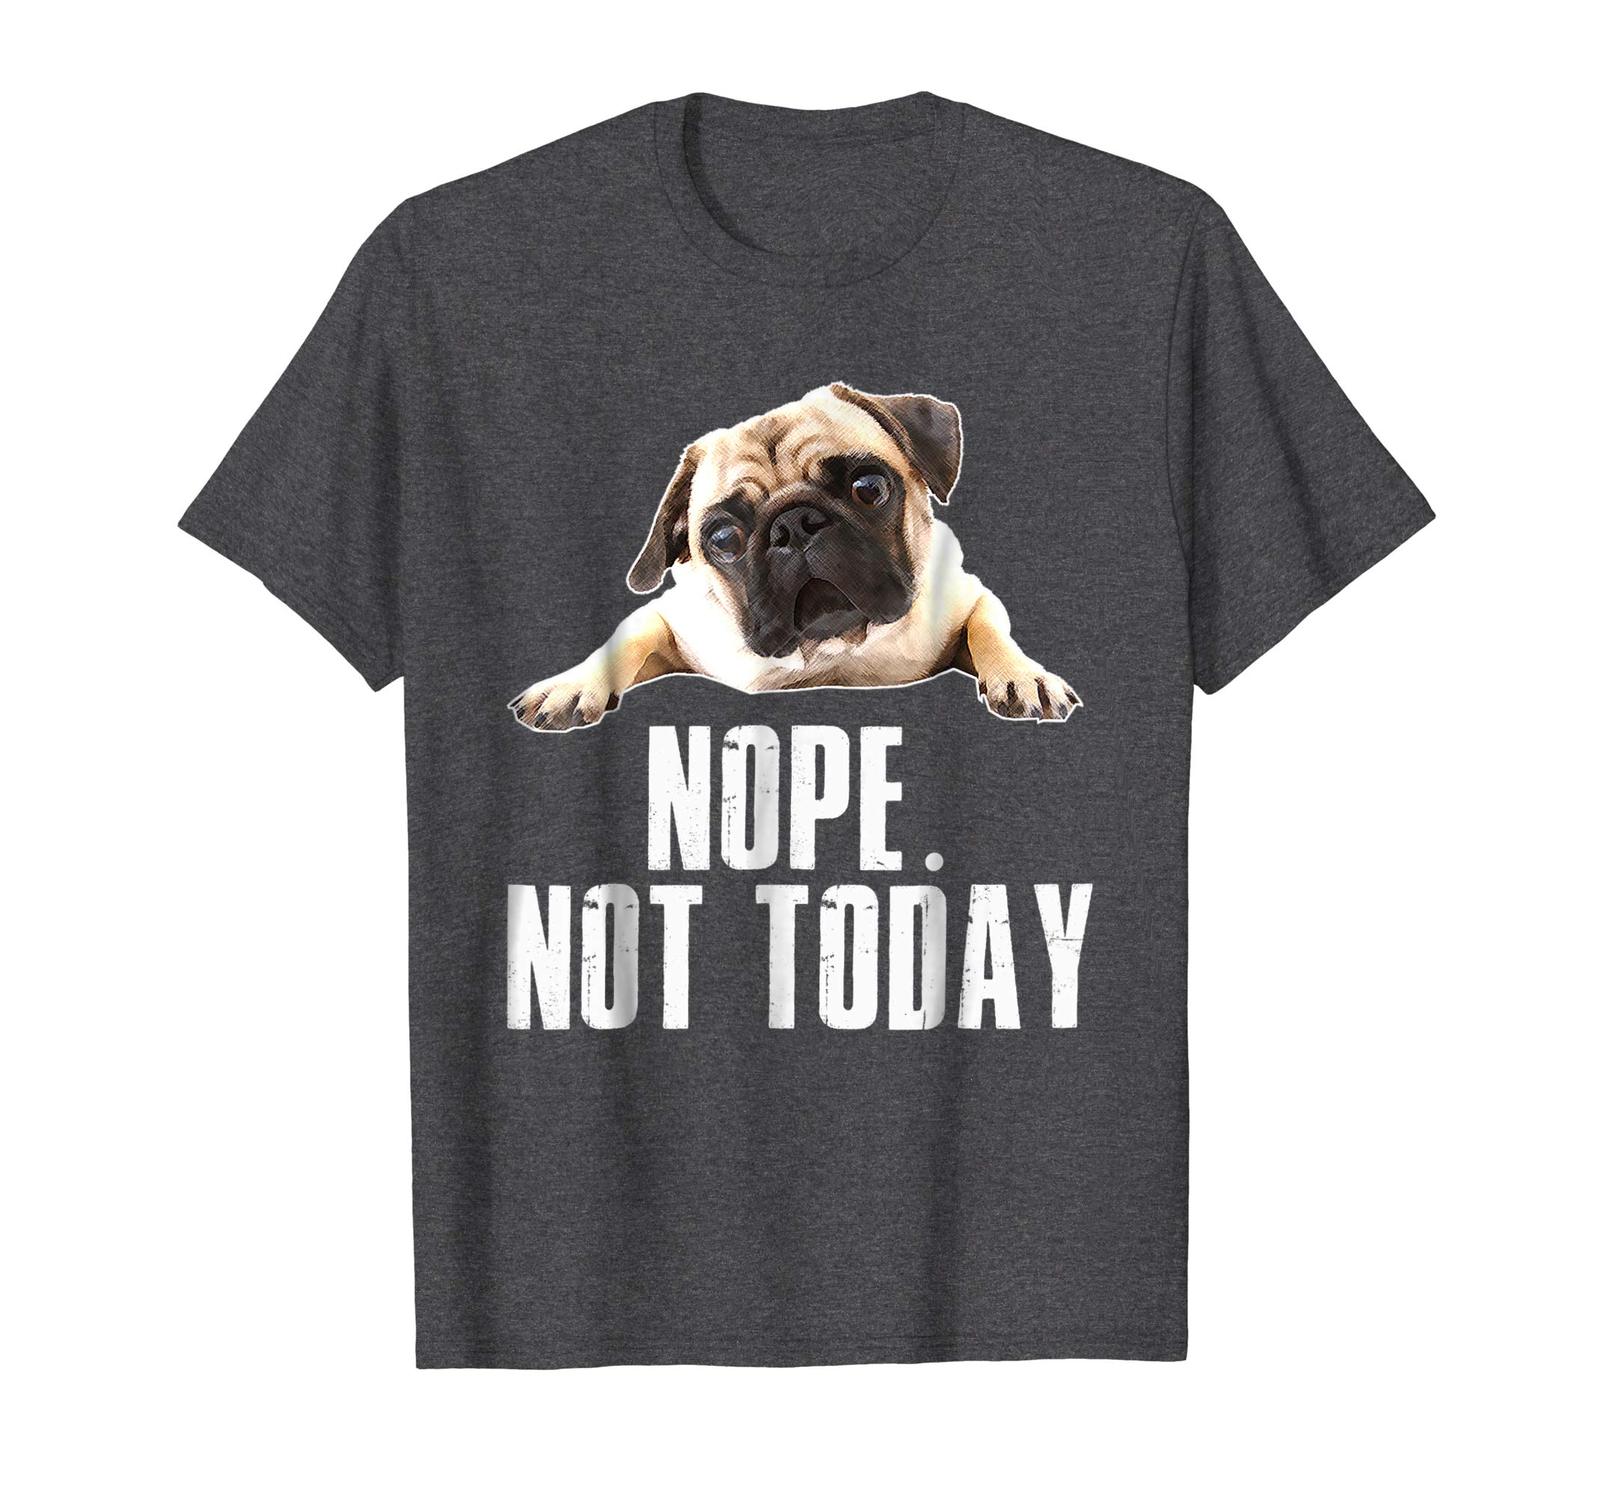 Funny Shirt - Nope Dog T-Shirt Not Today Pug for Men Women Mom Kids Dad ...